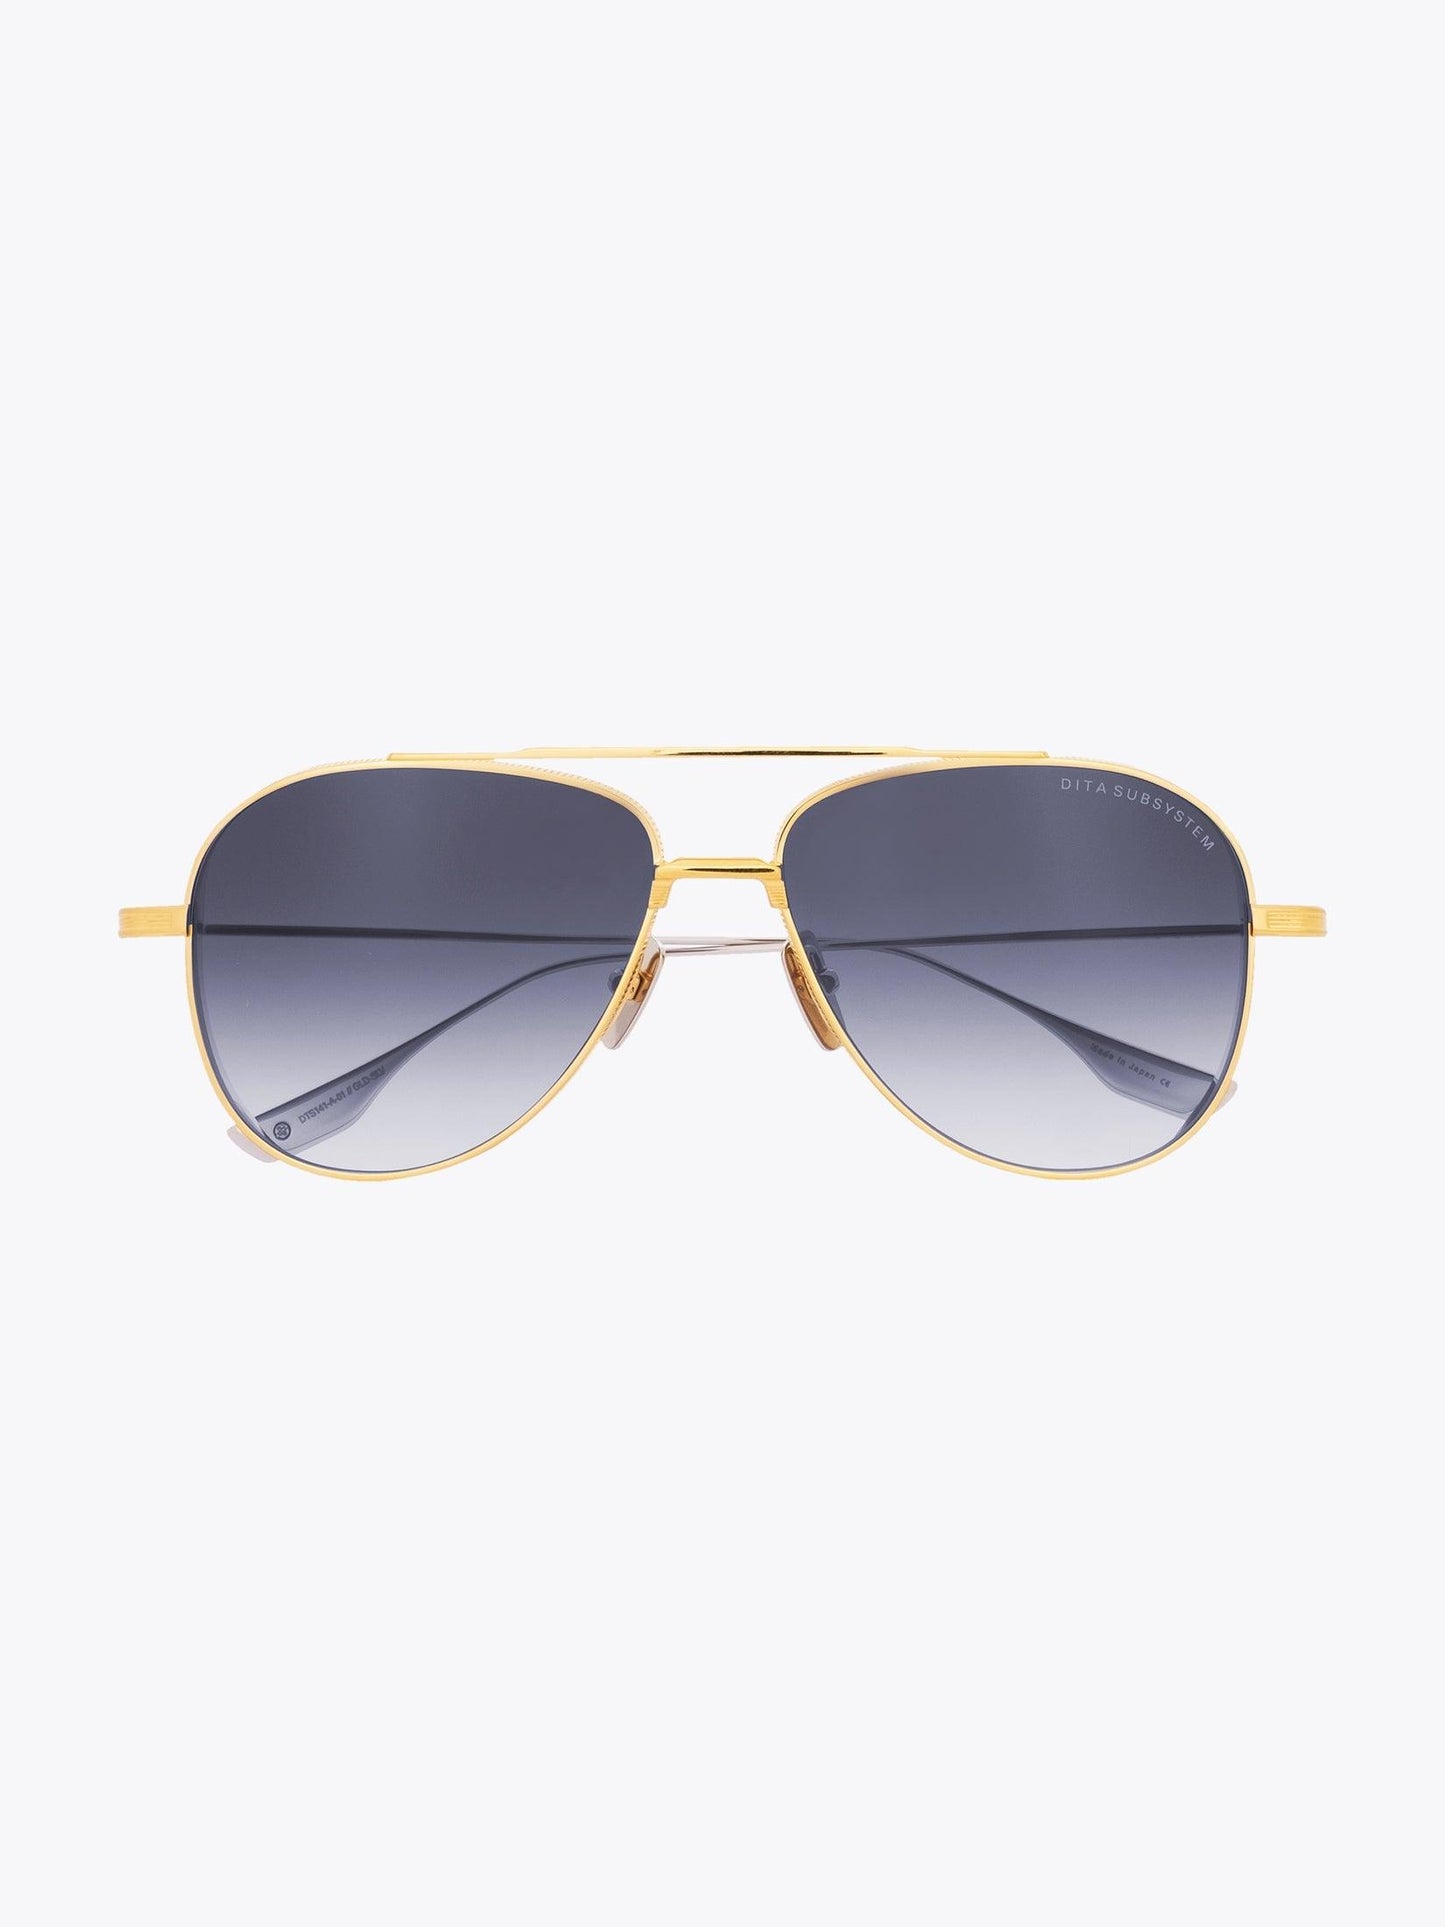 DITA Subsystem Gold Sunglasses - APODEP.com